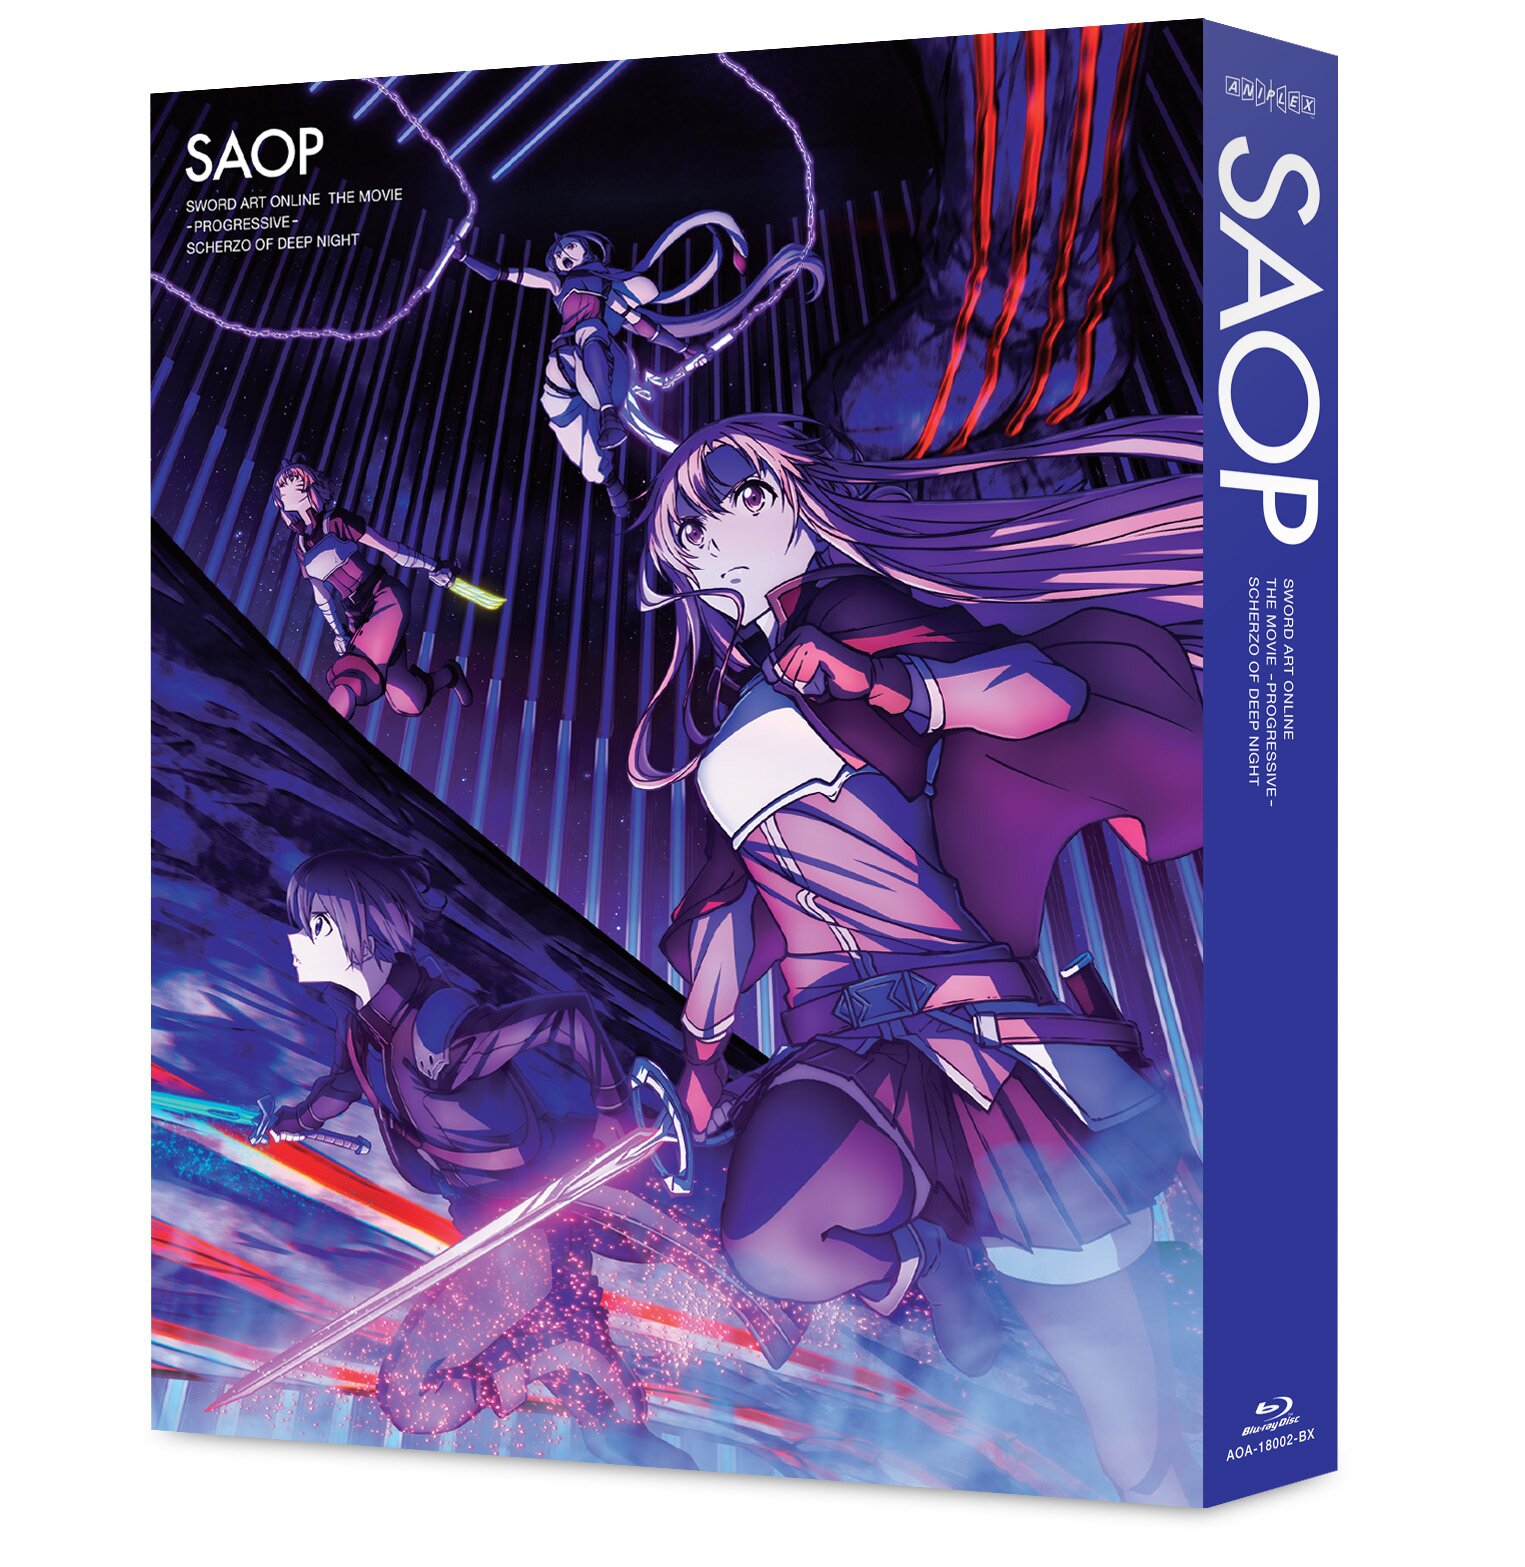 Sword Art Online the Movie -Progressive- Scherzo of Deep Night Limited  Edition Blu-ray